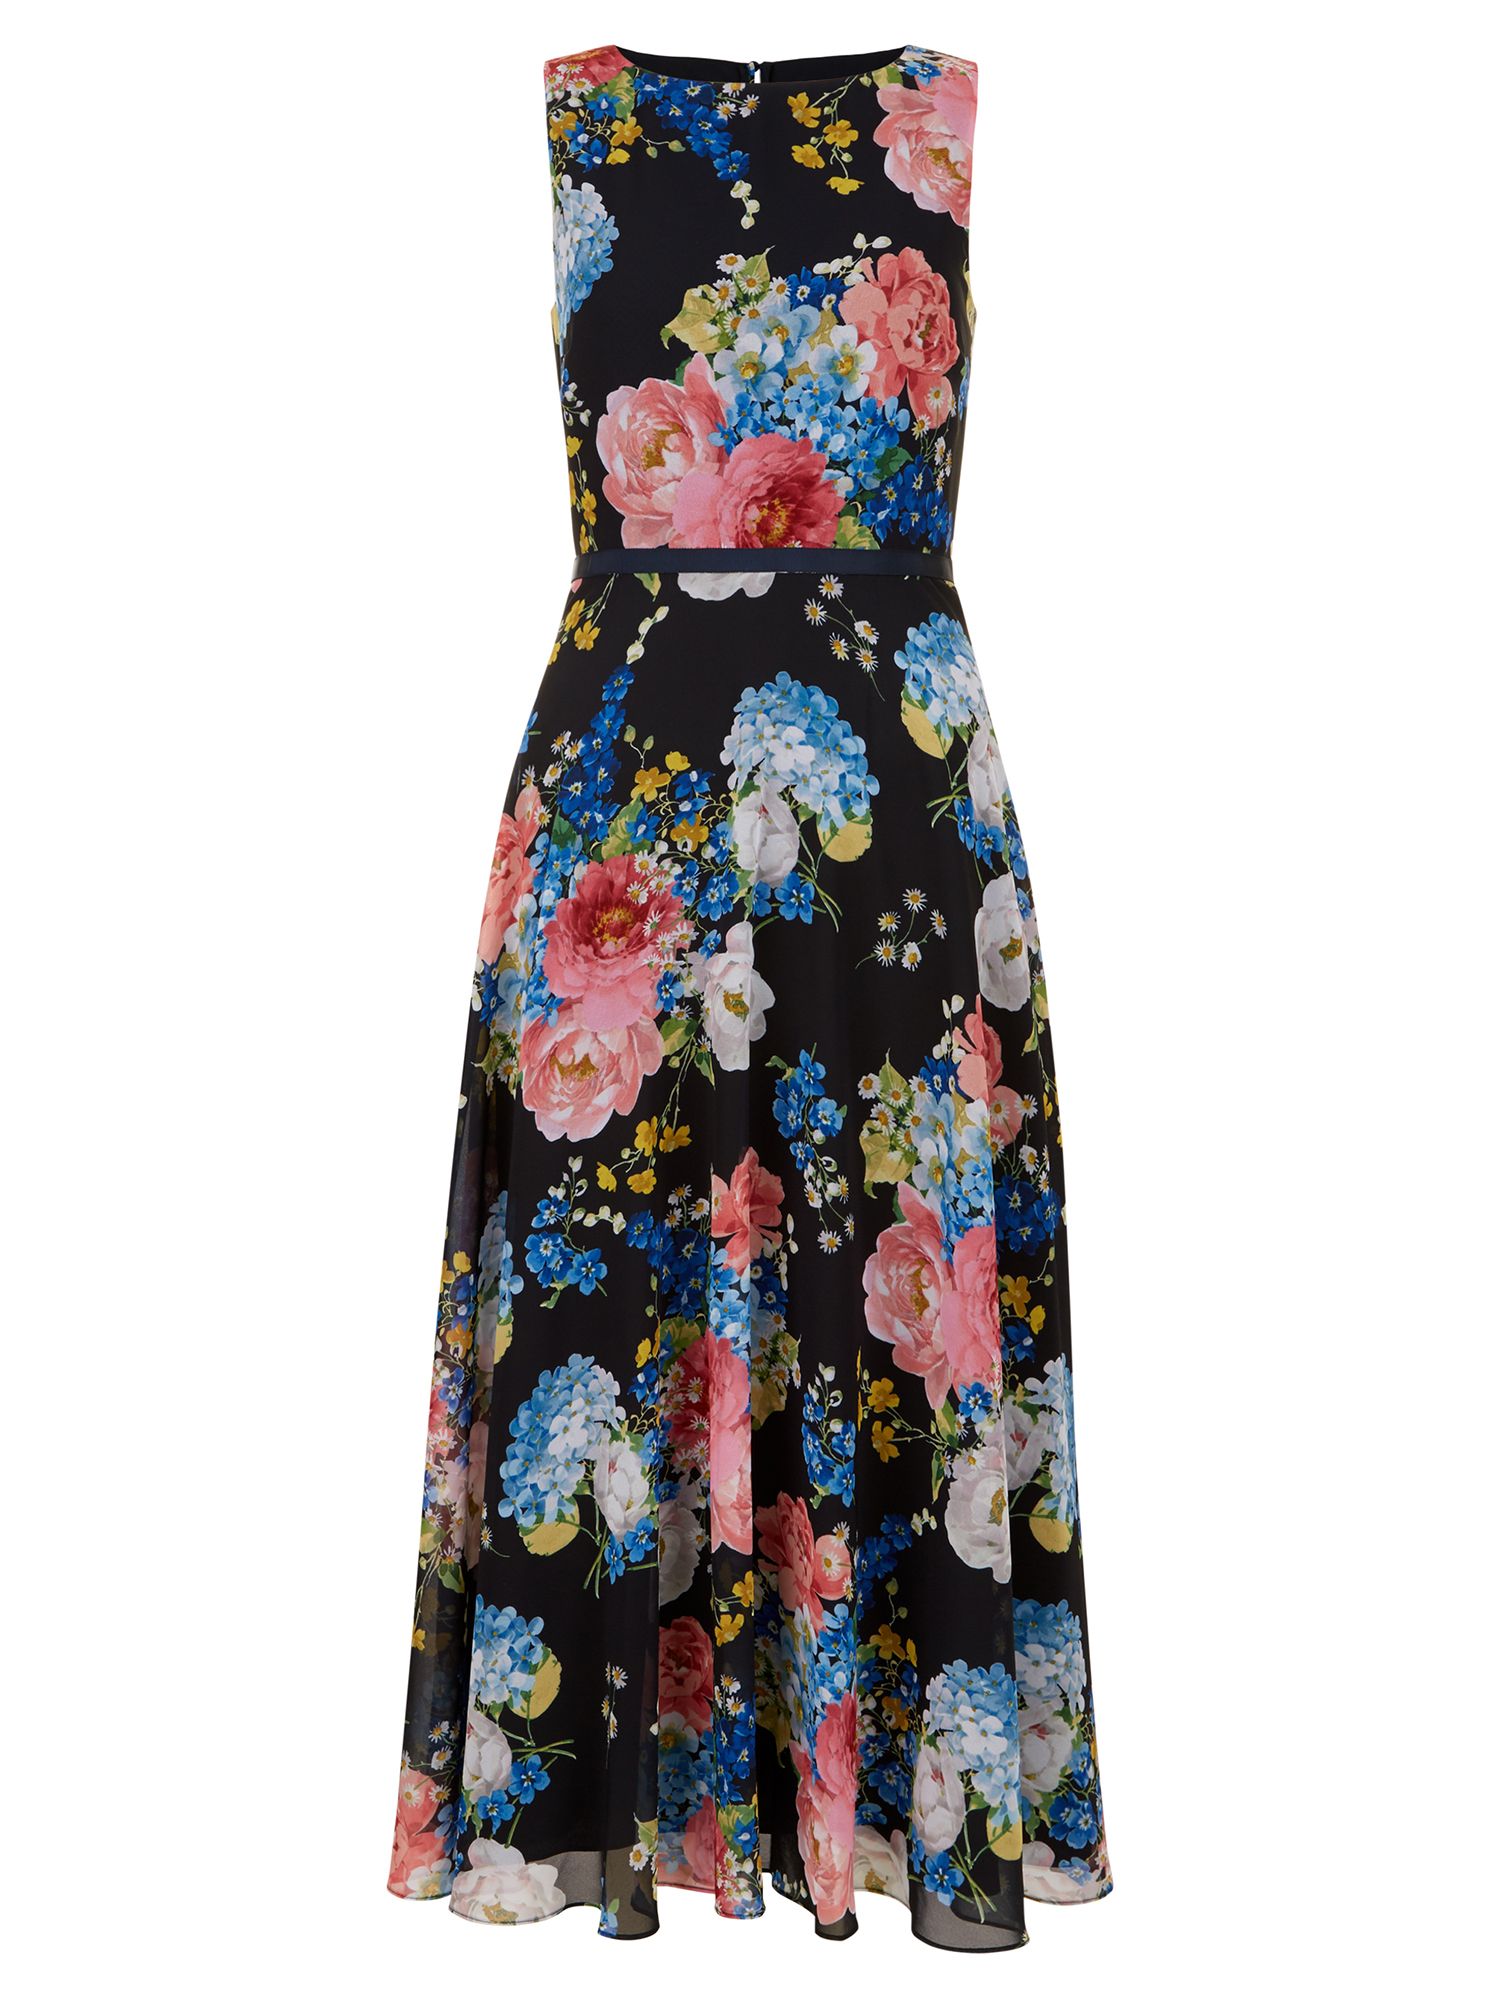 Hobbs Carly Floral Print Midi Dress, Navy/Multi at John Lewis & Partners